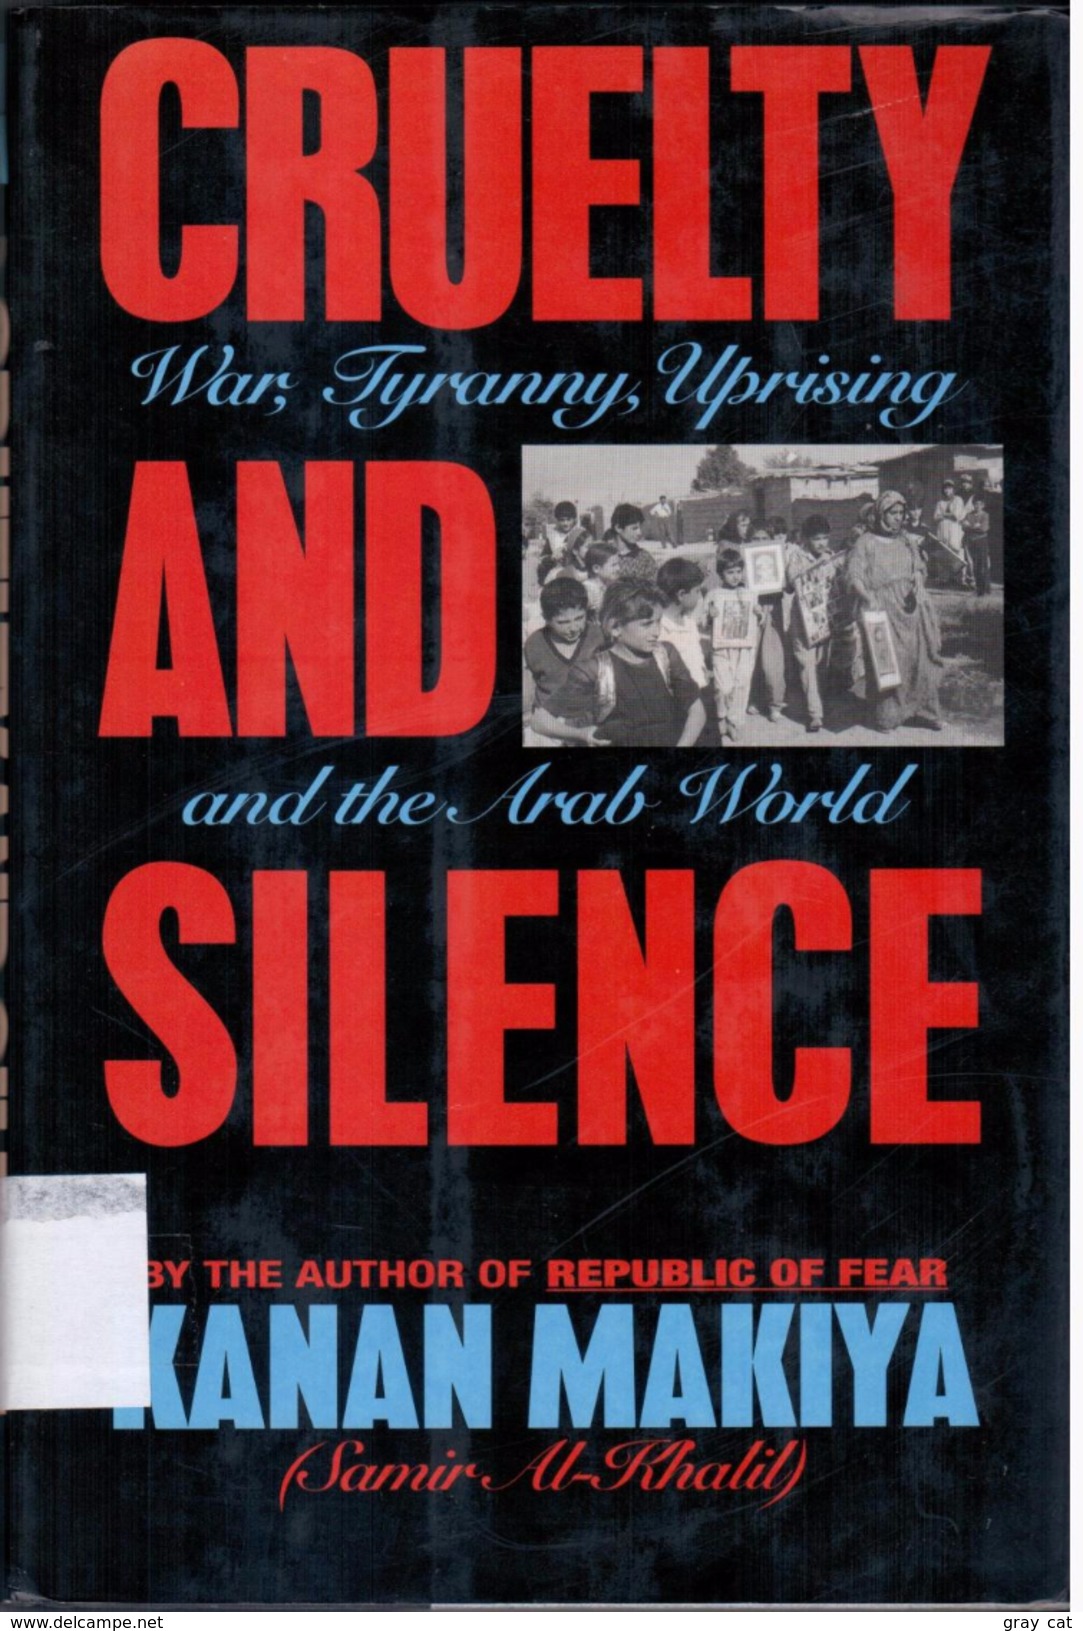 Cruelty And Silence: War, Tyranny, Uprising In The Arab World By Makiya, Kanan (ISBN 9780393031089) - Medio Oriente